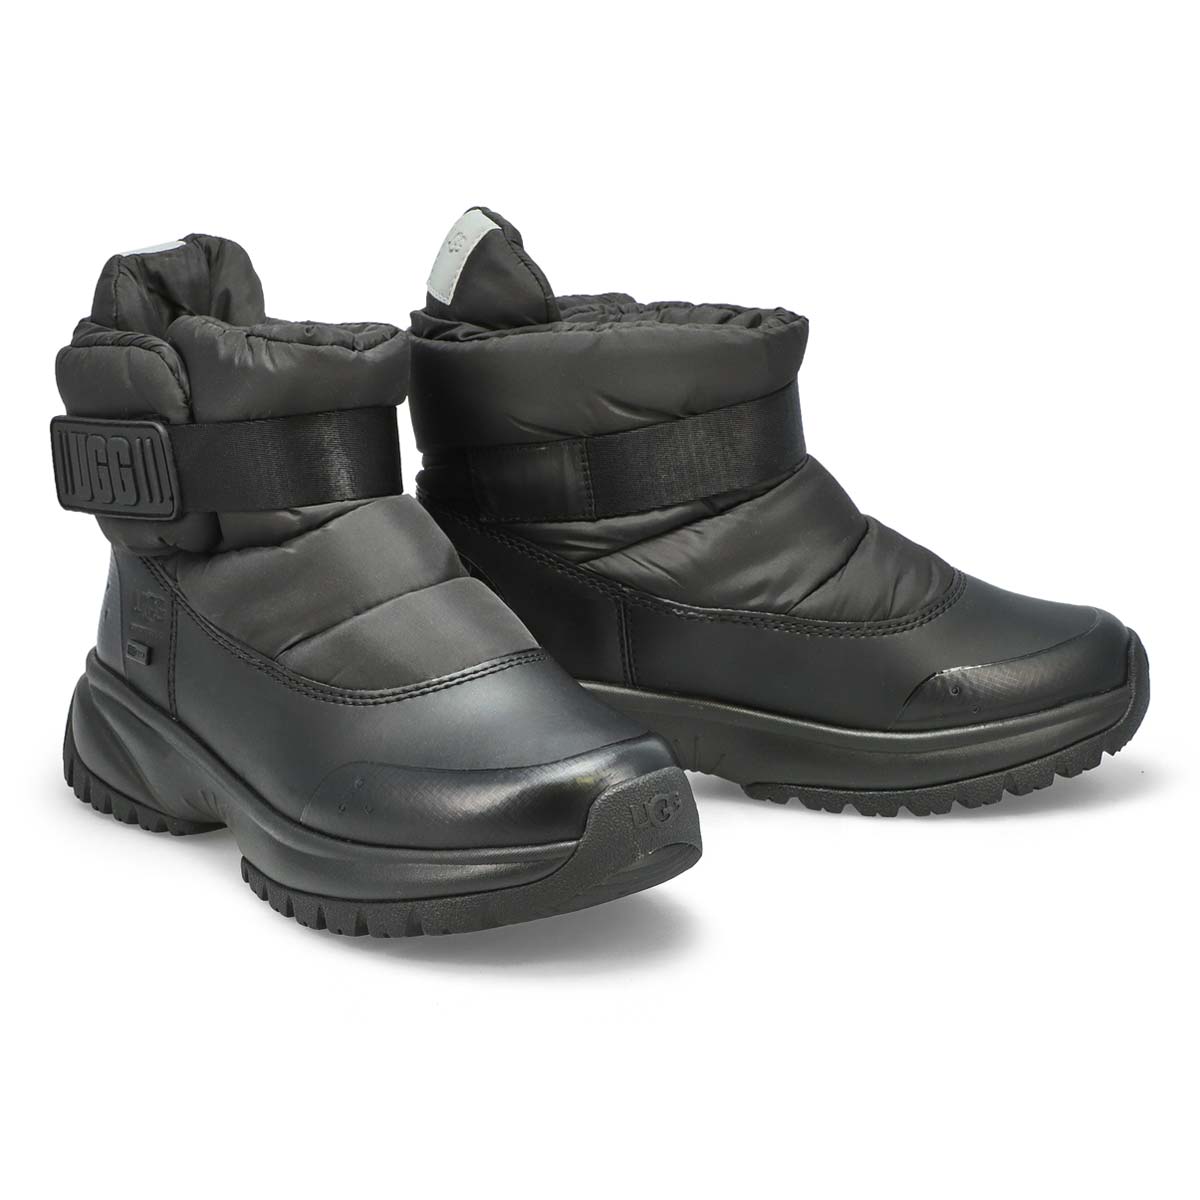 UGG Women's Yose Puff Winter Boot - Black | SoftMoc.com